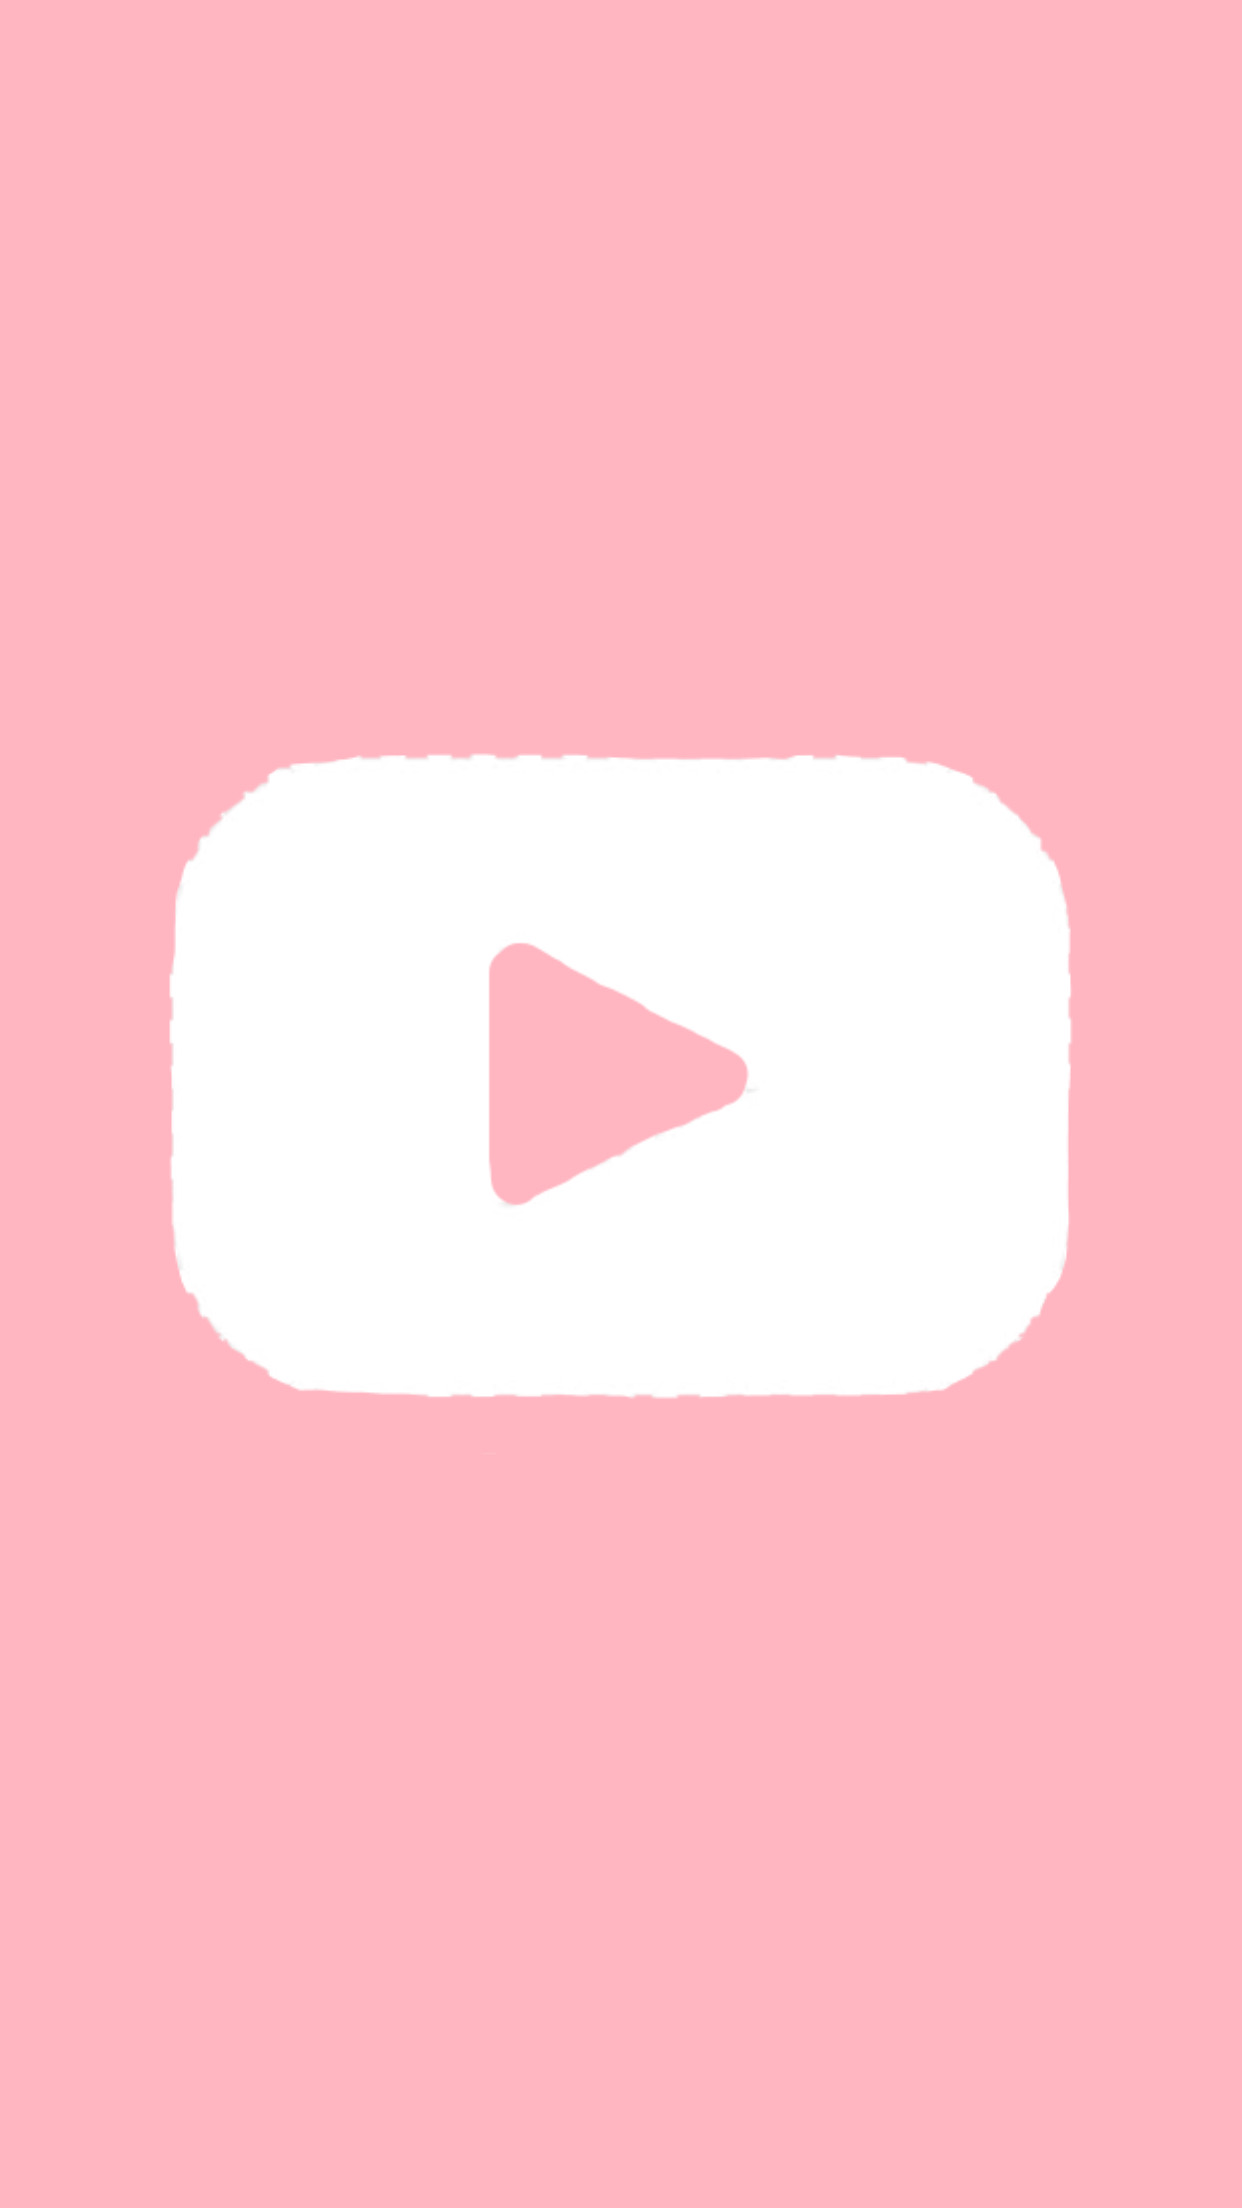 #youtube #logo #pink #white #freetoedit